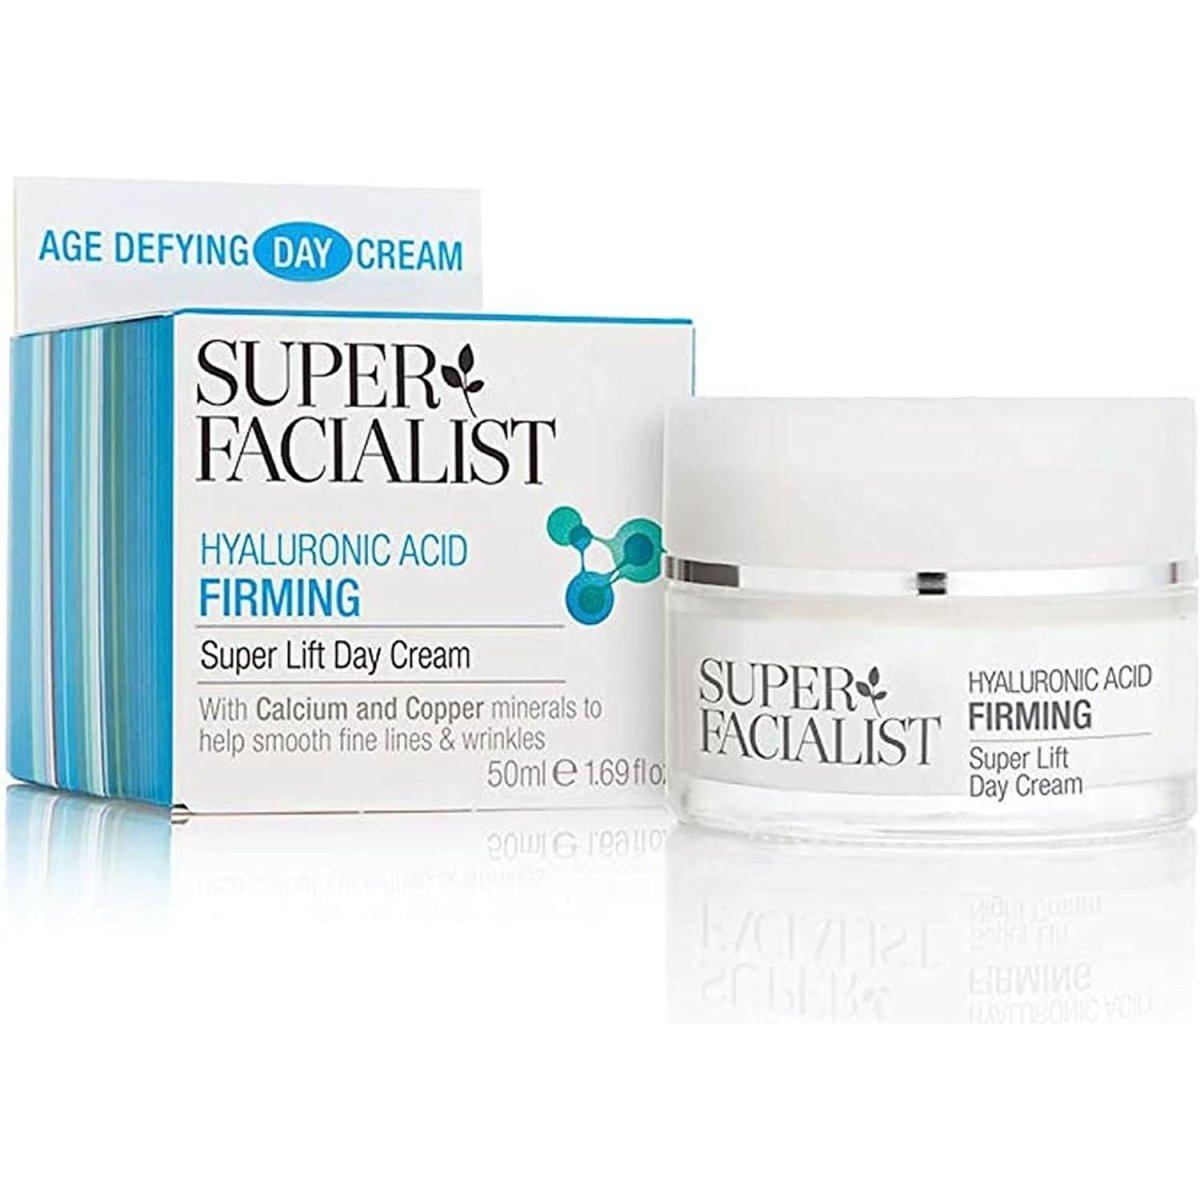 Super Facialist Hyaluronic Acid Firming Super Lift Day Cream - 50ml - Glam Global UK